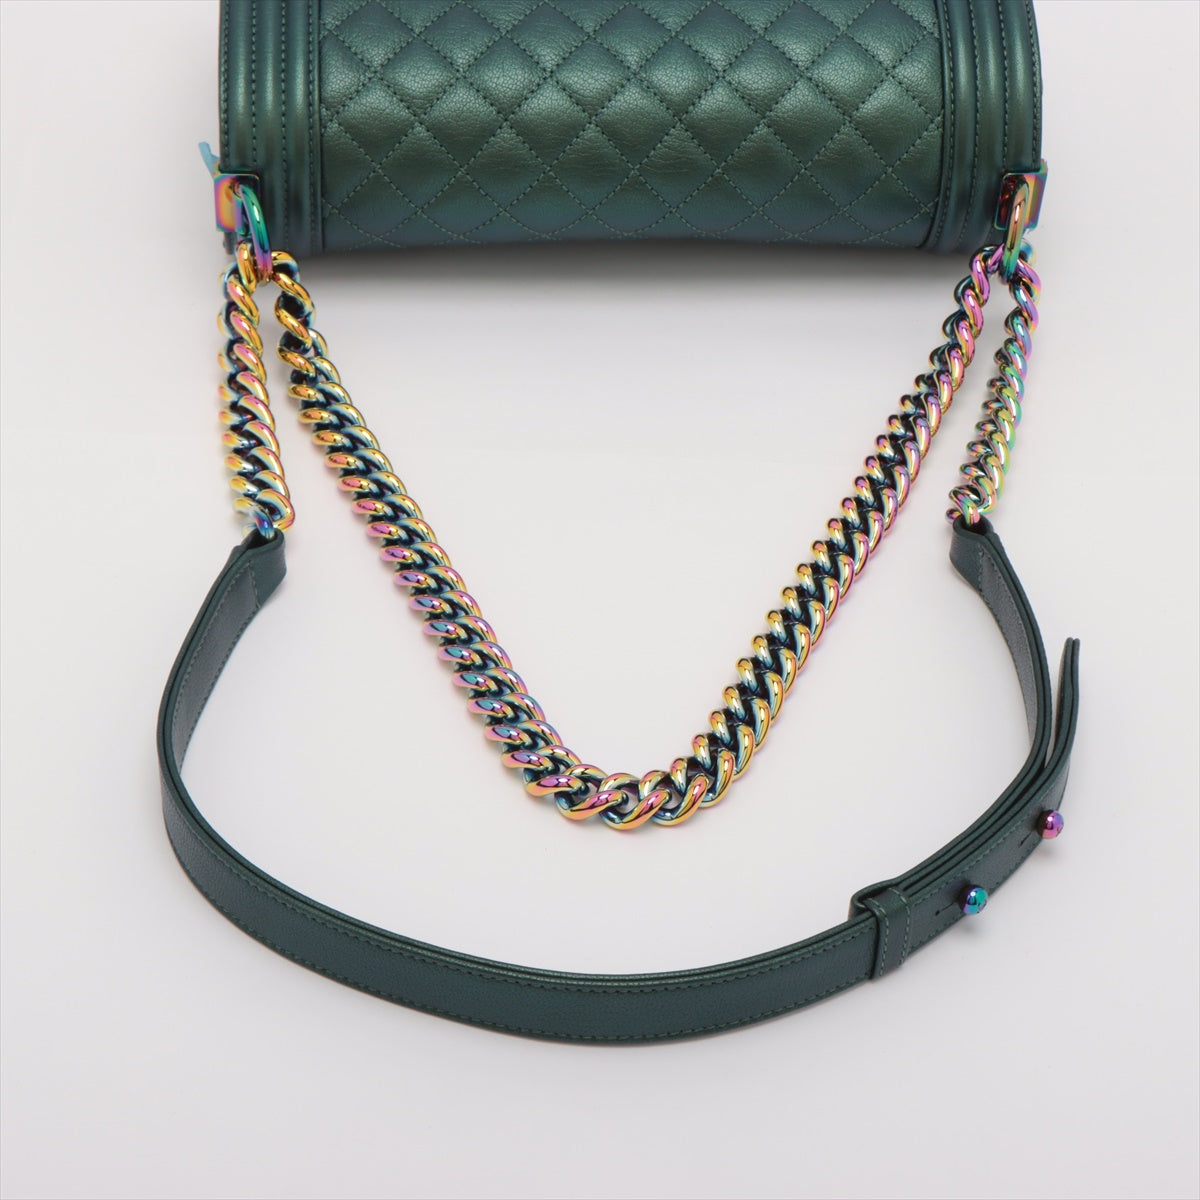 Chanel BOY CHANEL 25 Calfskin Chain Shoulder Bag Green Rainbow Metal Fittings 21XXXXXX A67086